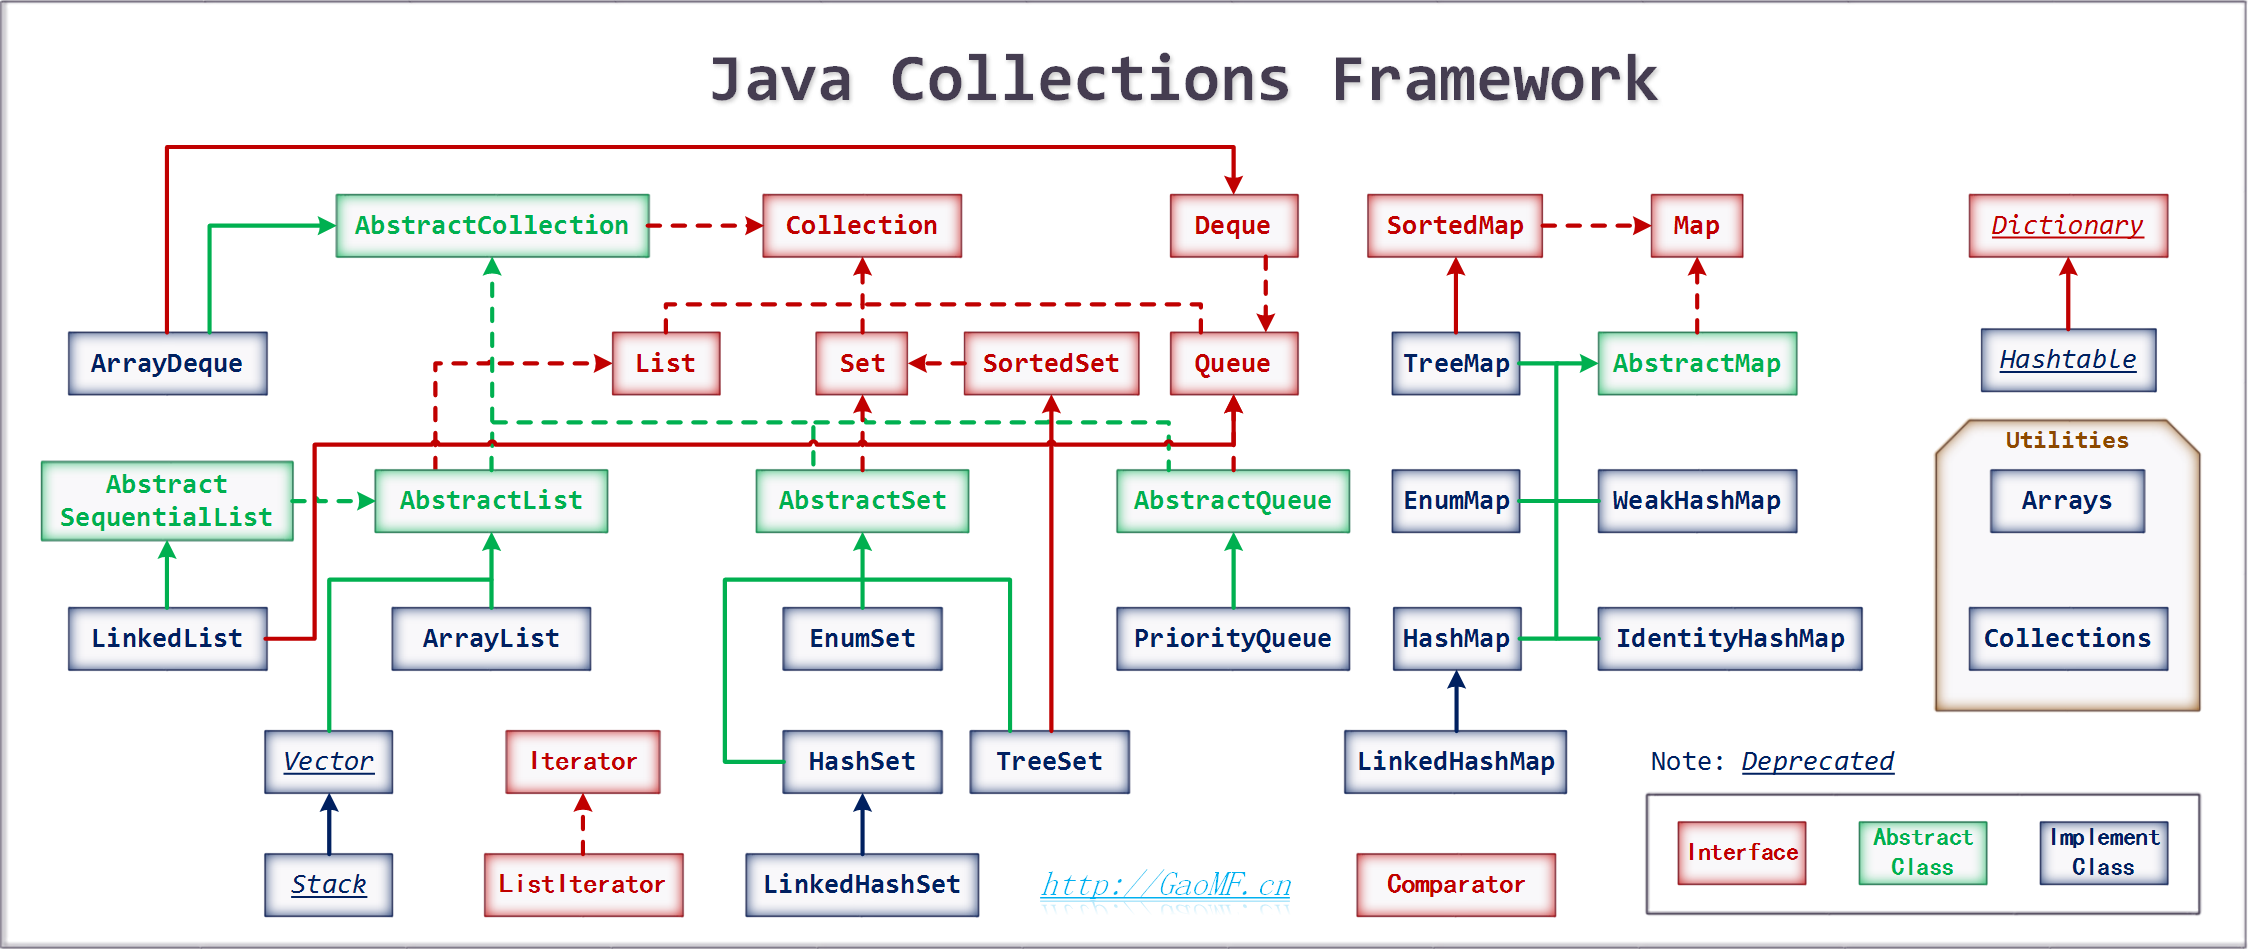 Collections mapping. Иерархия интерфейсов коллекций java. Java collection Framework иерархия. Java collections структура. Java collections Framework иерархия интерфейсов.